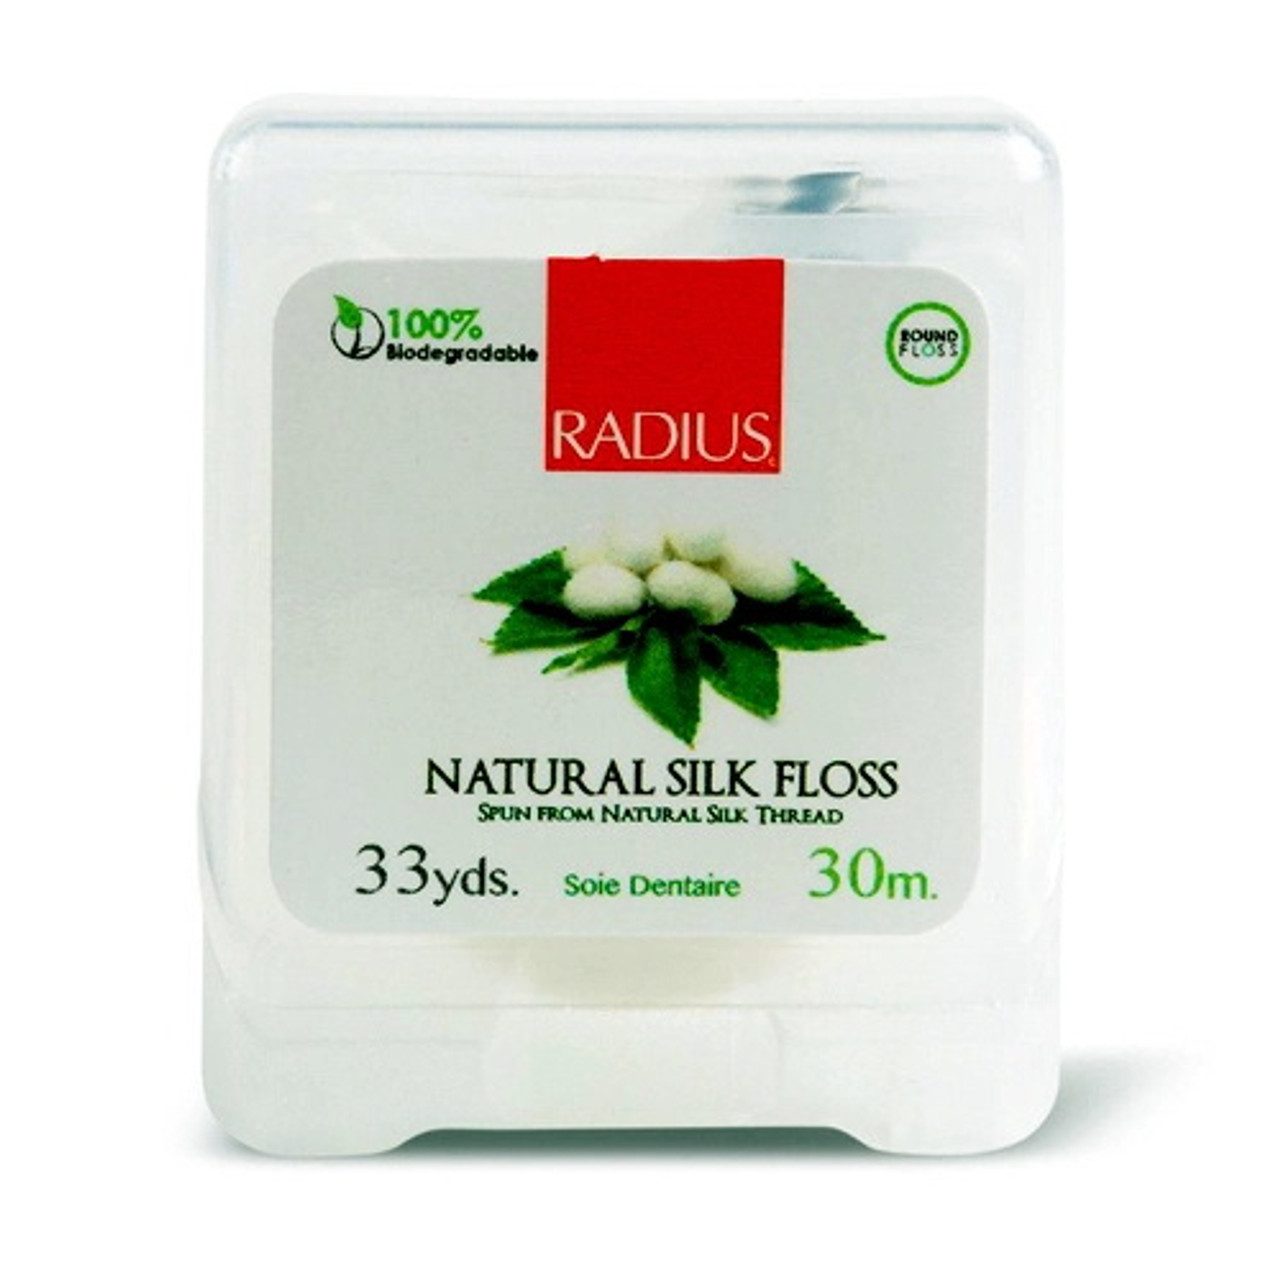 Natural Silk Floss, 100% Biodegradable 33 Yards -